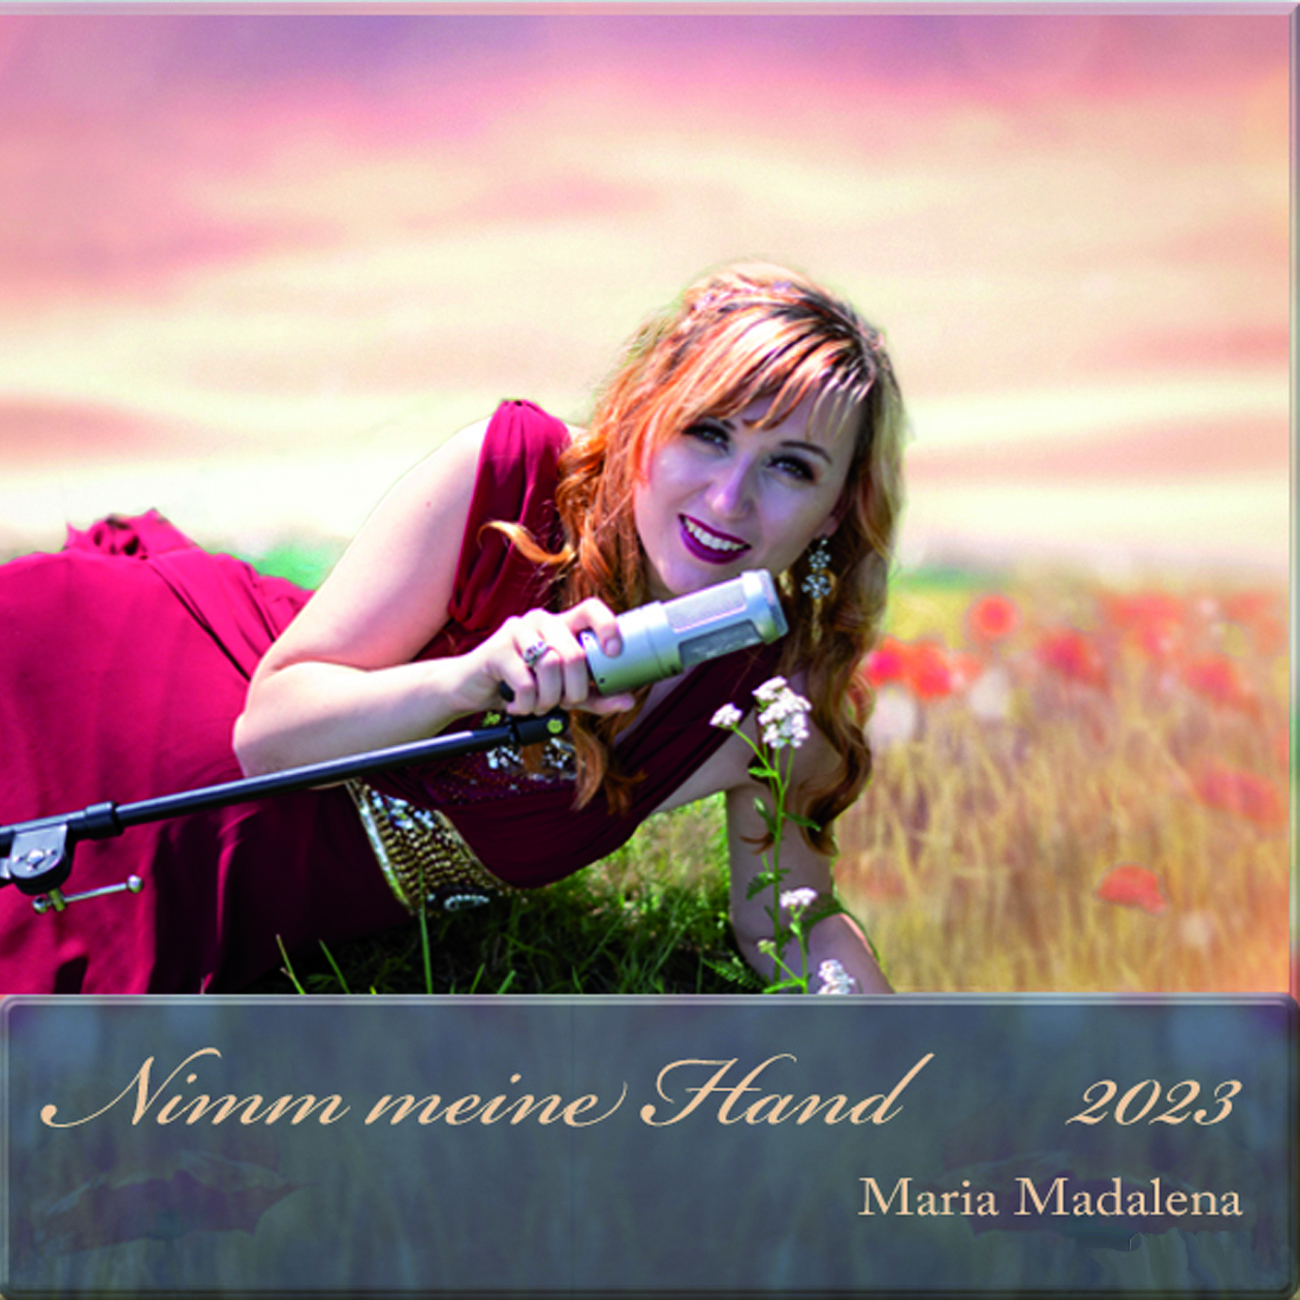 Maria Madalena - Nimm meine Hand - cover.jpg